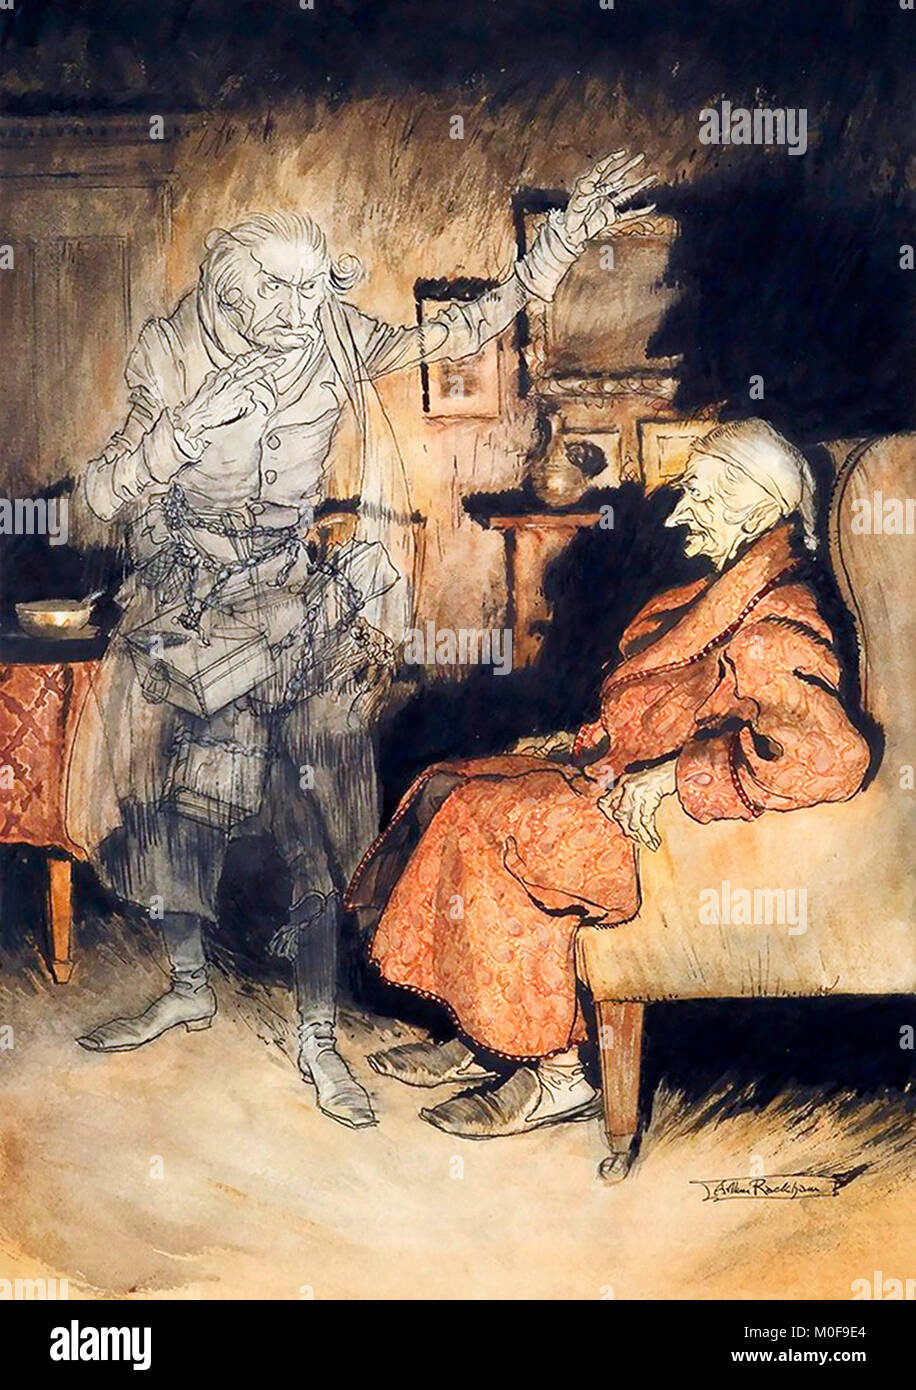 Scrooge e il fantasma di Marley da Arthur Rackham, penna, inchiostro e acquerello, da Dickens "A Christmas Carol", 1915 Foto Stock